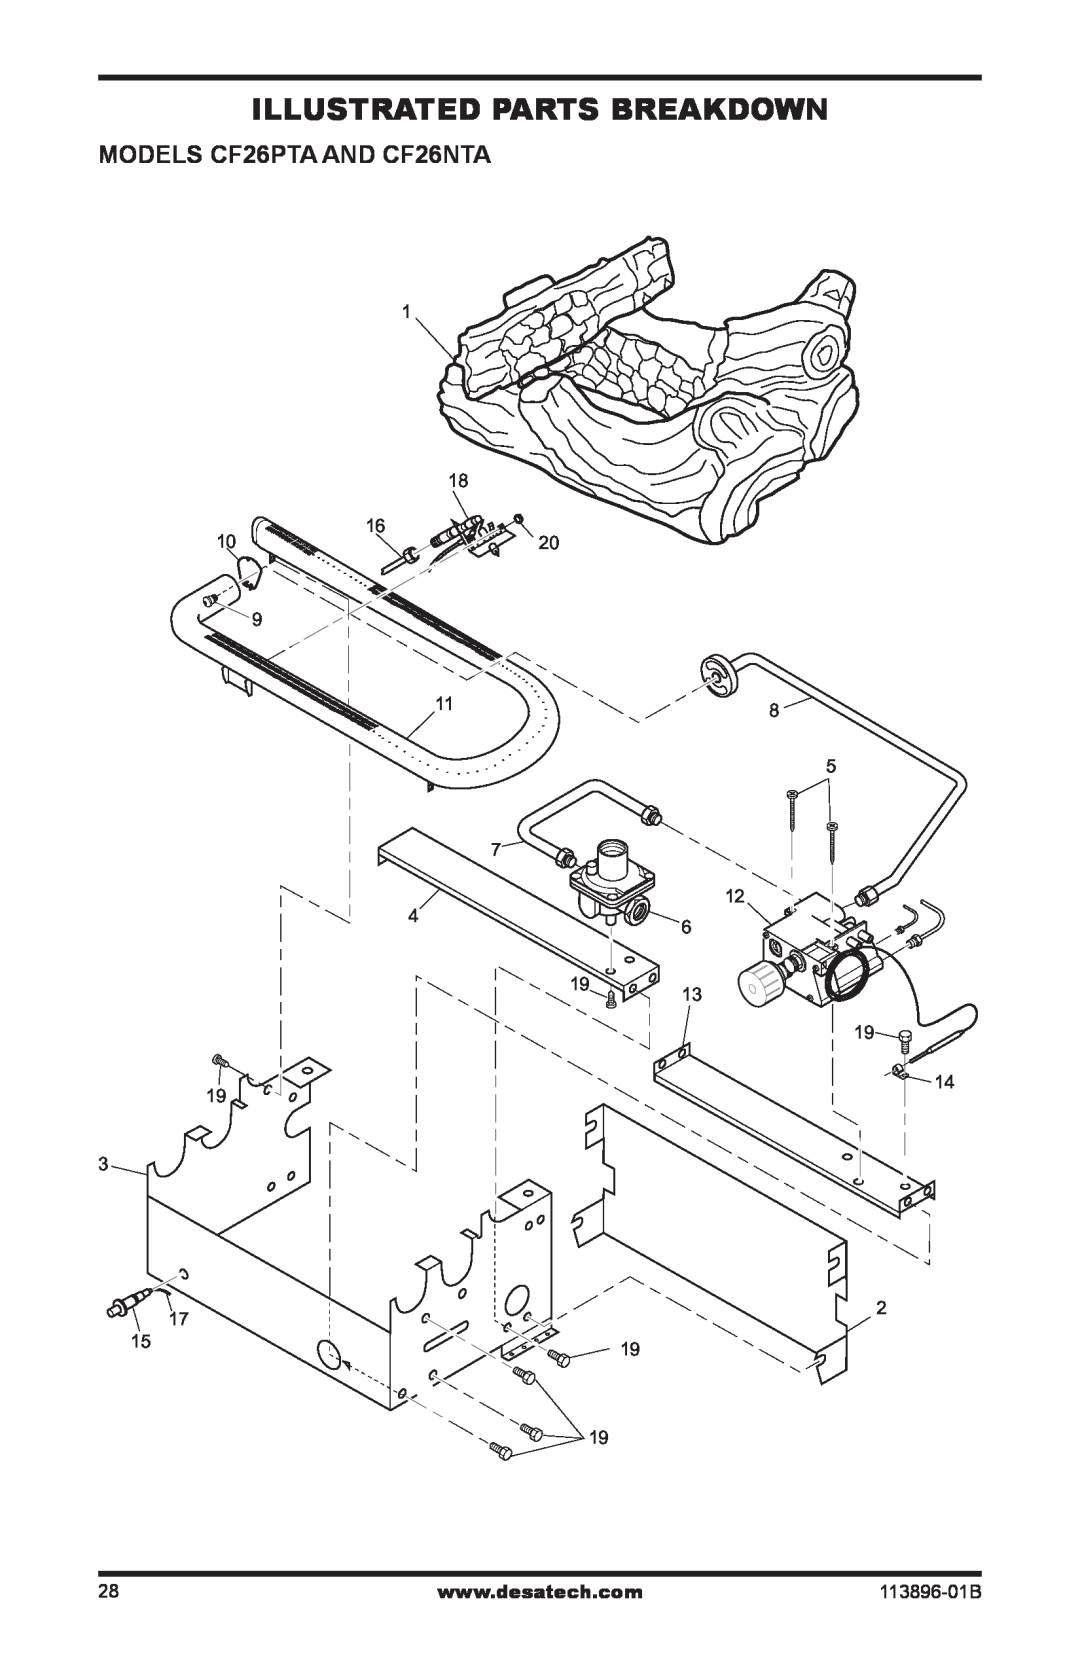 Desa installation manual Illustrated Parts Breakdown, MODELS CF26PTA AND CF26NTA 